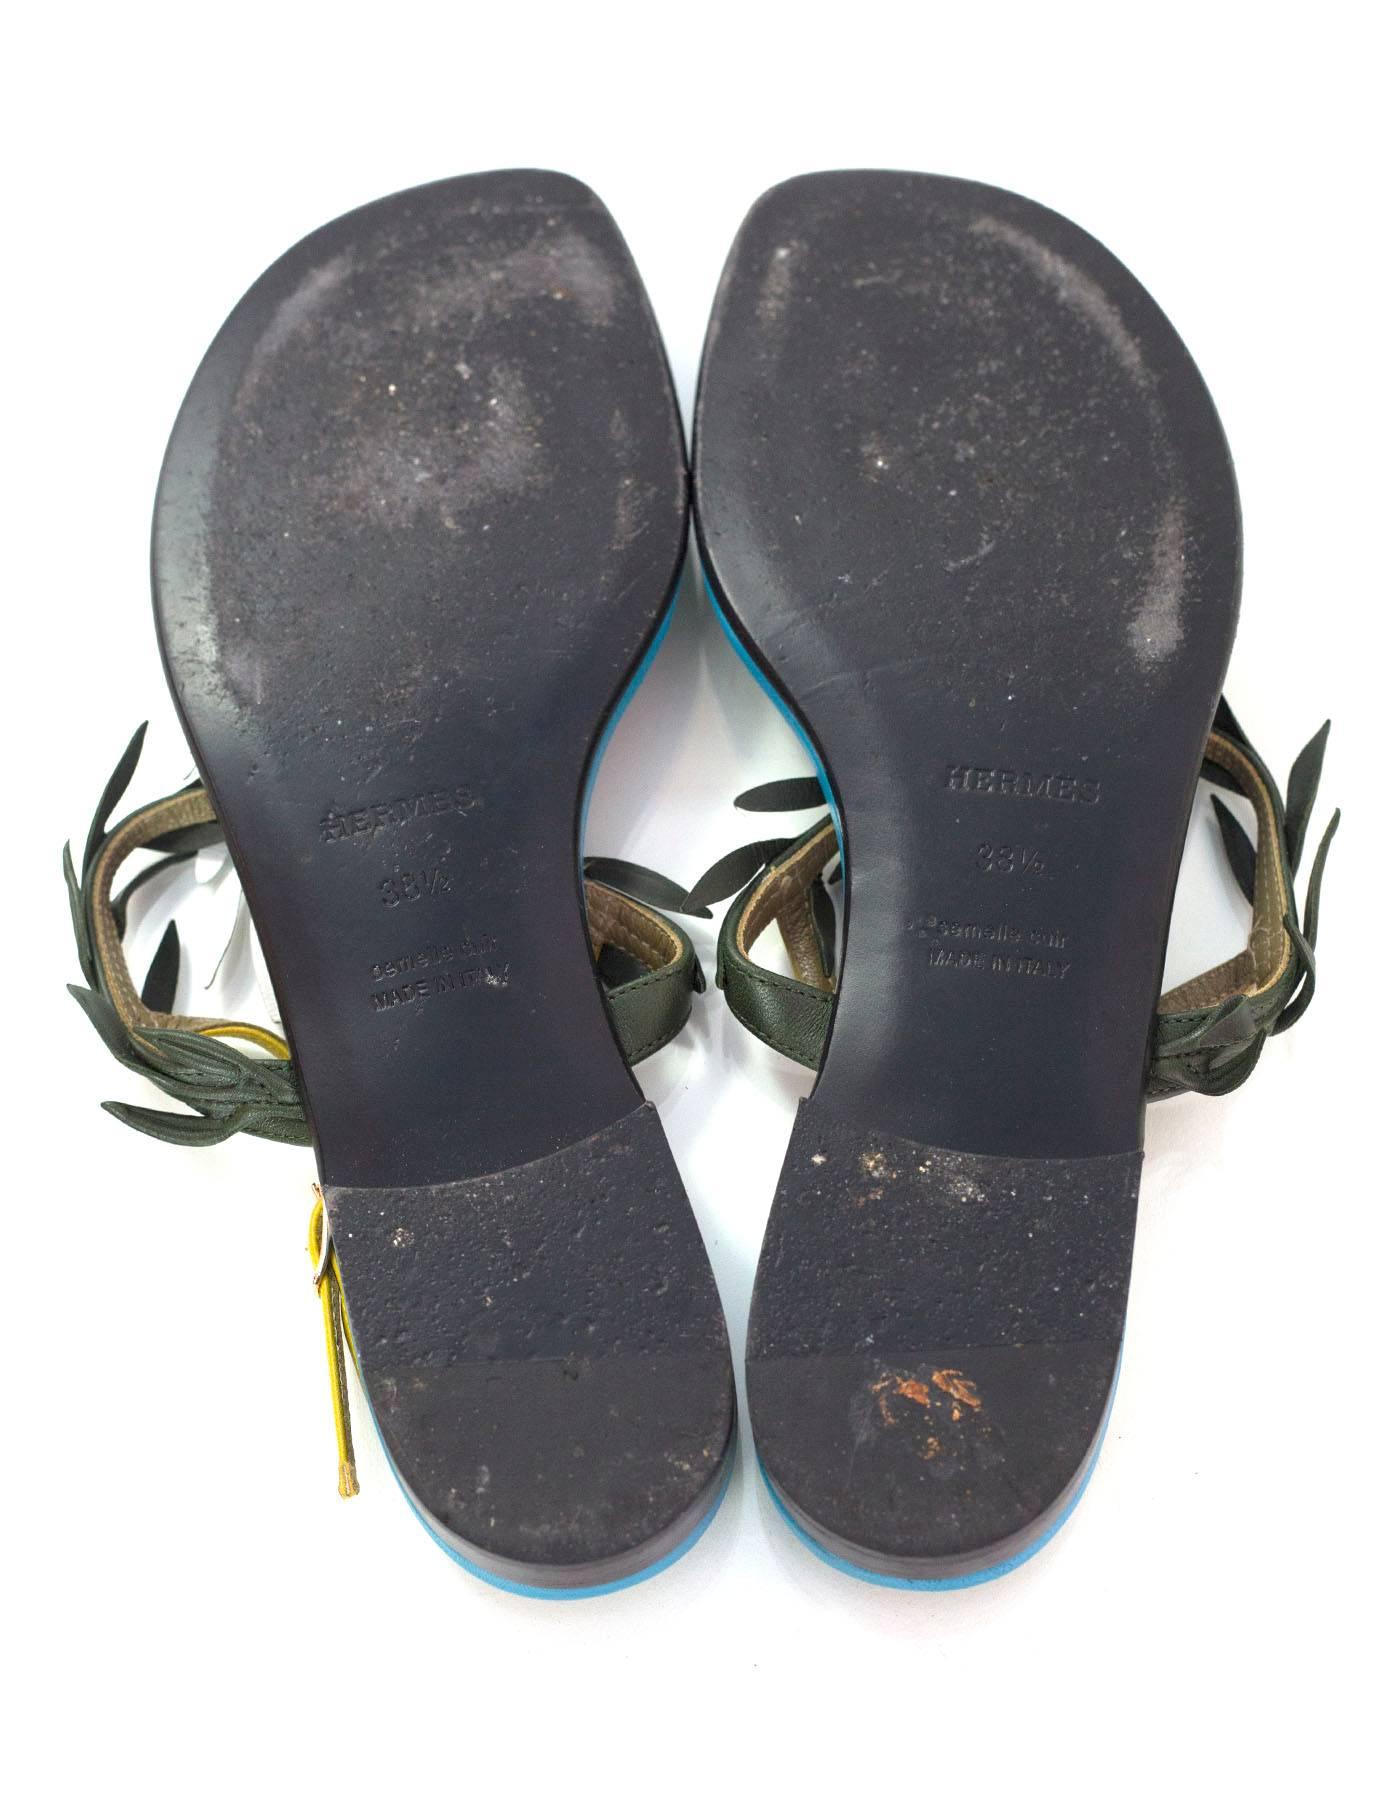 Hermes '16 Multi-Colored Leather Myrthe Sandals sz 38.5 2